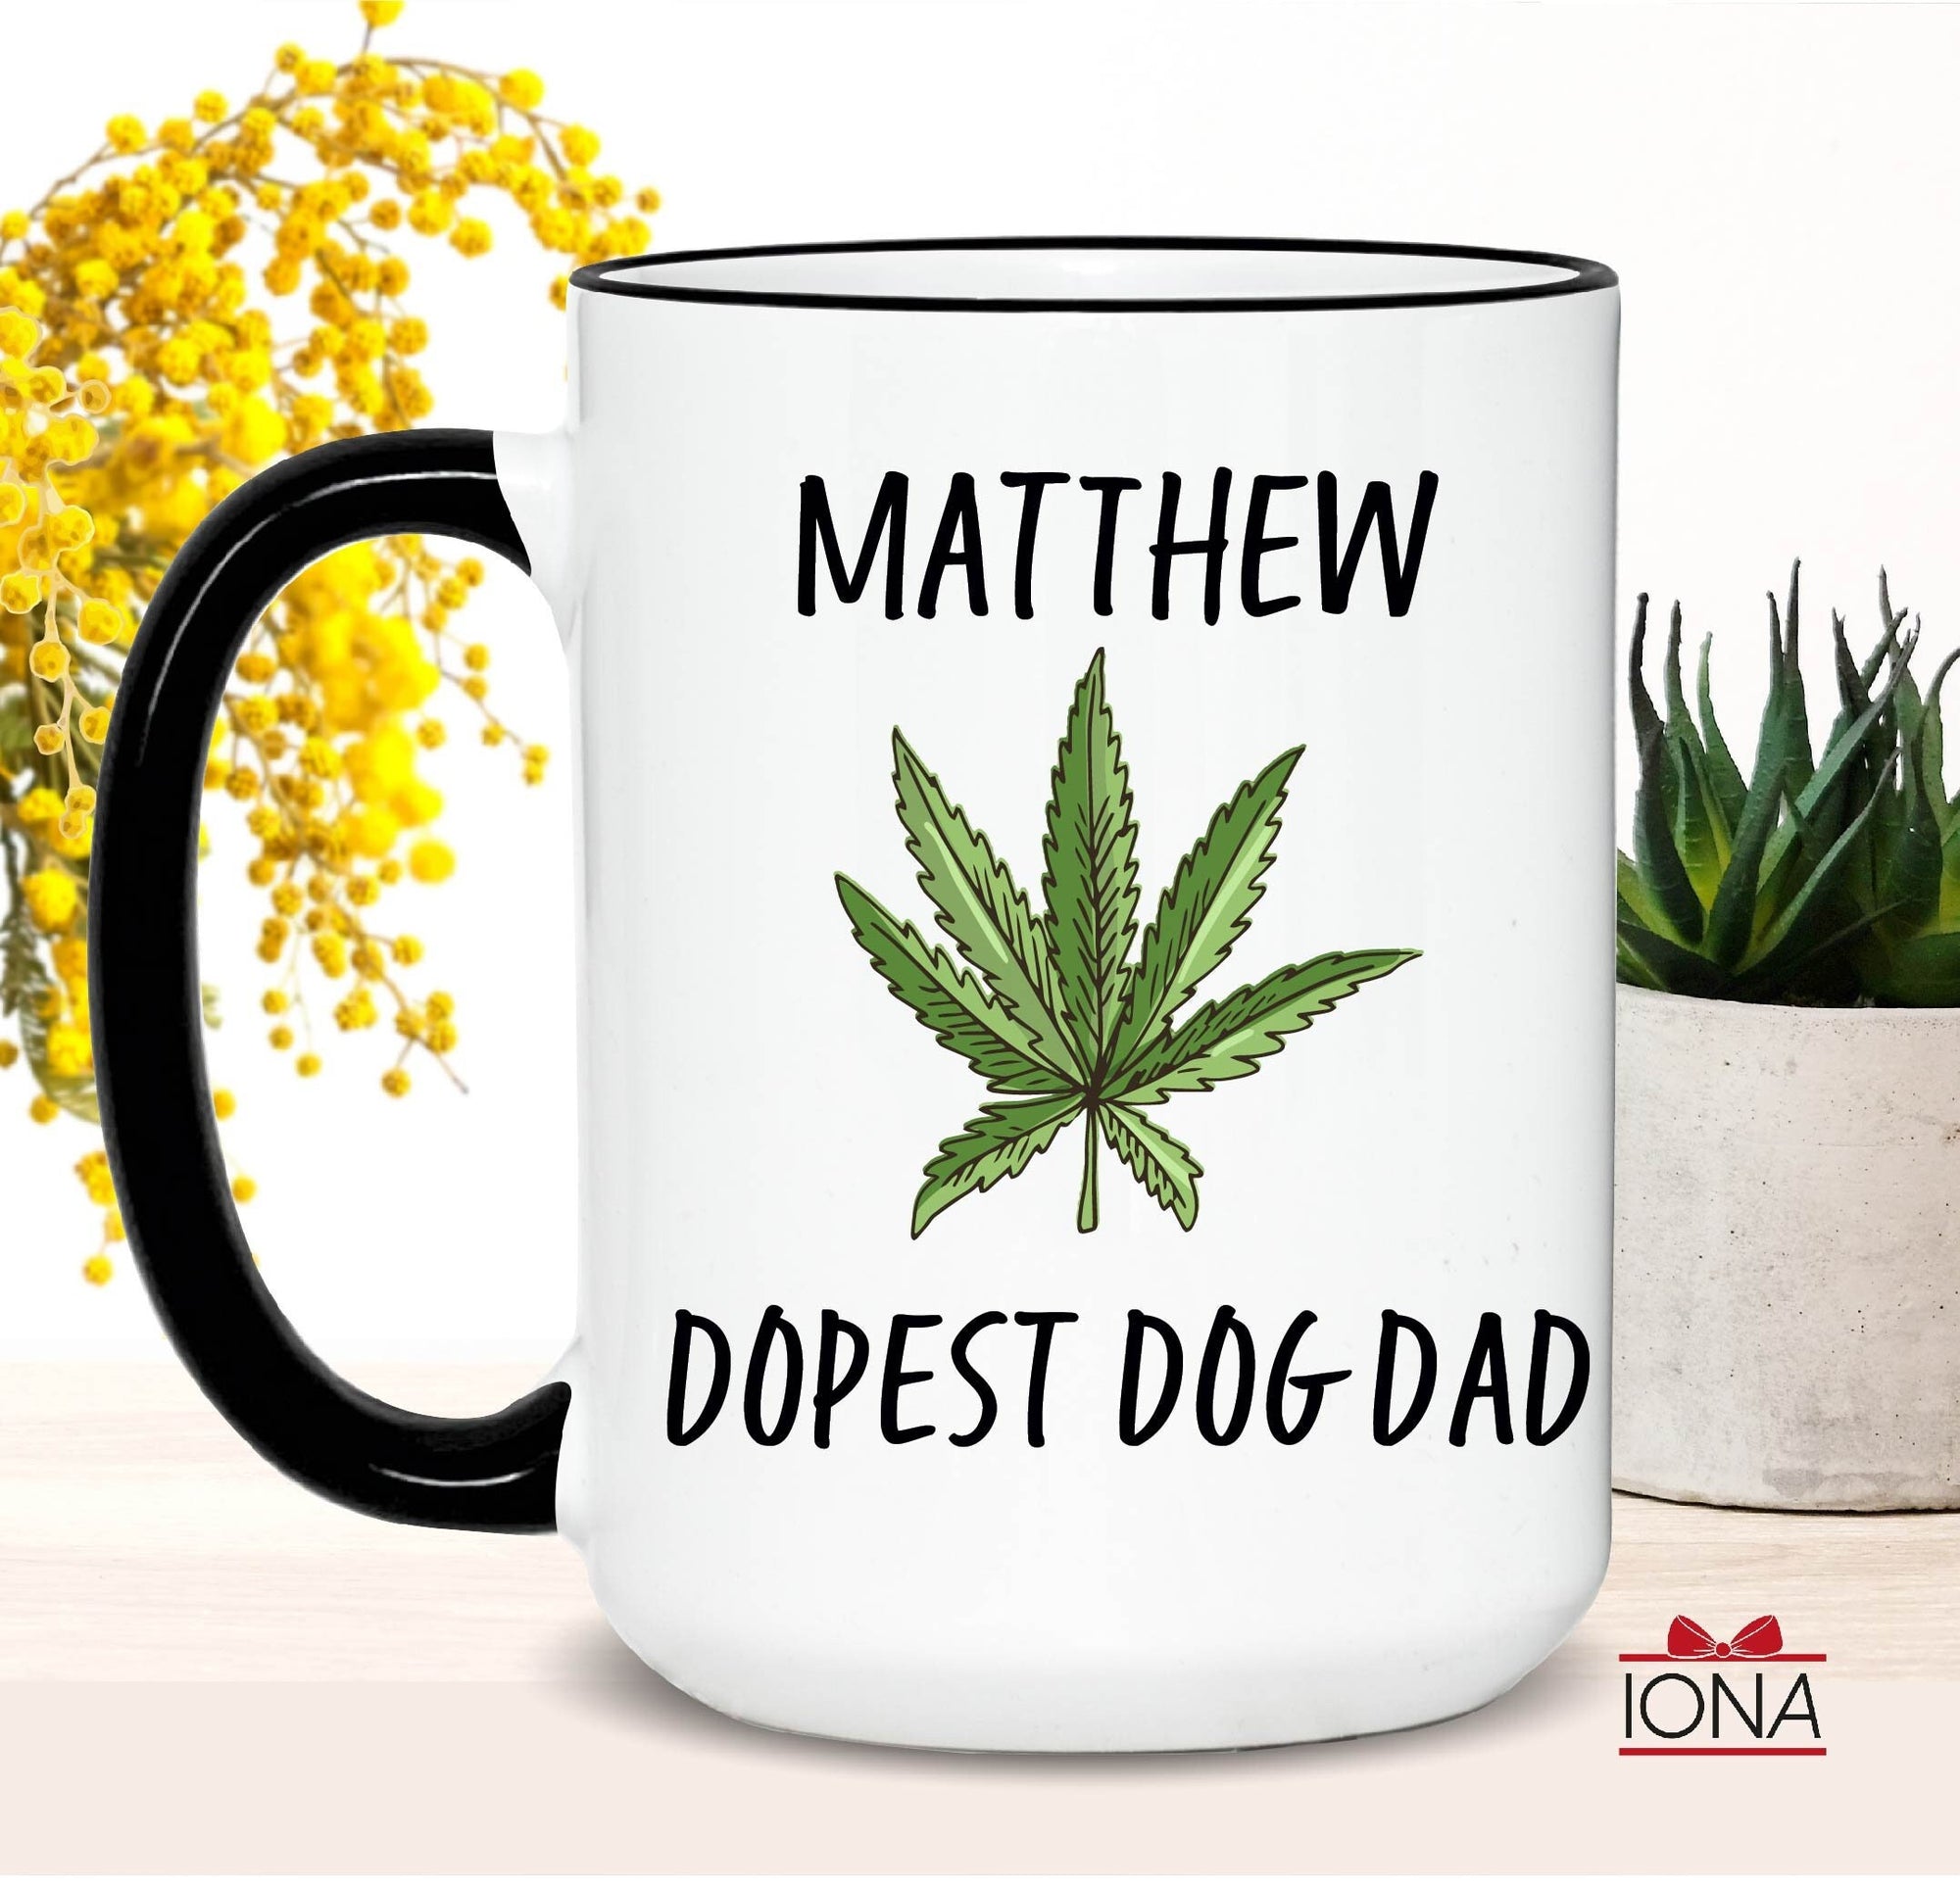 Dopest Dog Dad Coffee Mug, Personalized Dog Dad Birthday Gift, Funny Birthday Gift for Dog Dad , Dog Dad Tea Cup, Best Fucking Dog Father